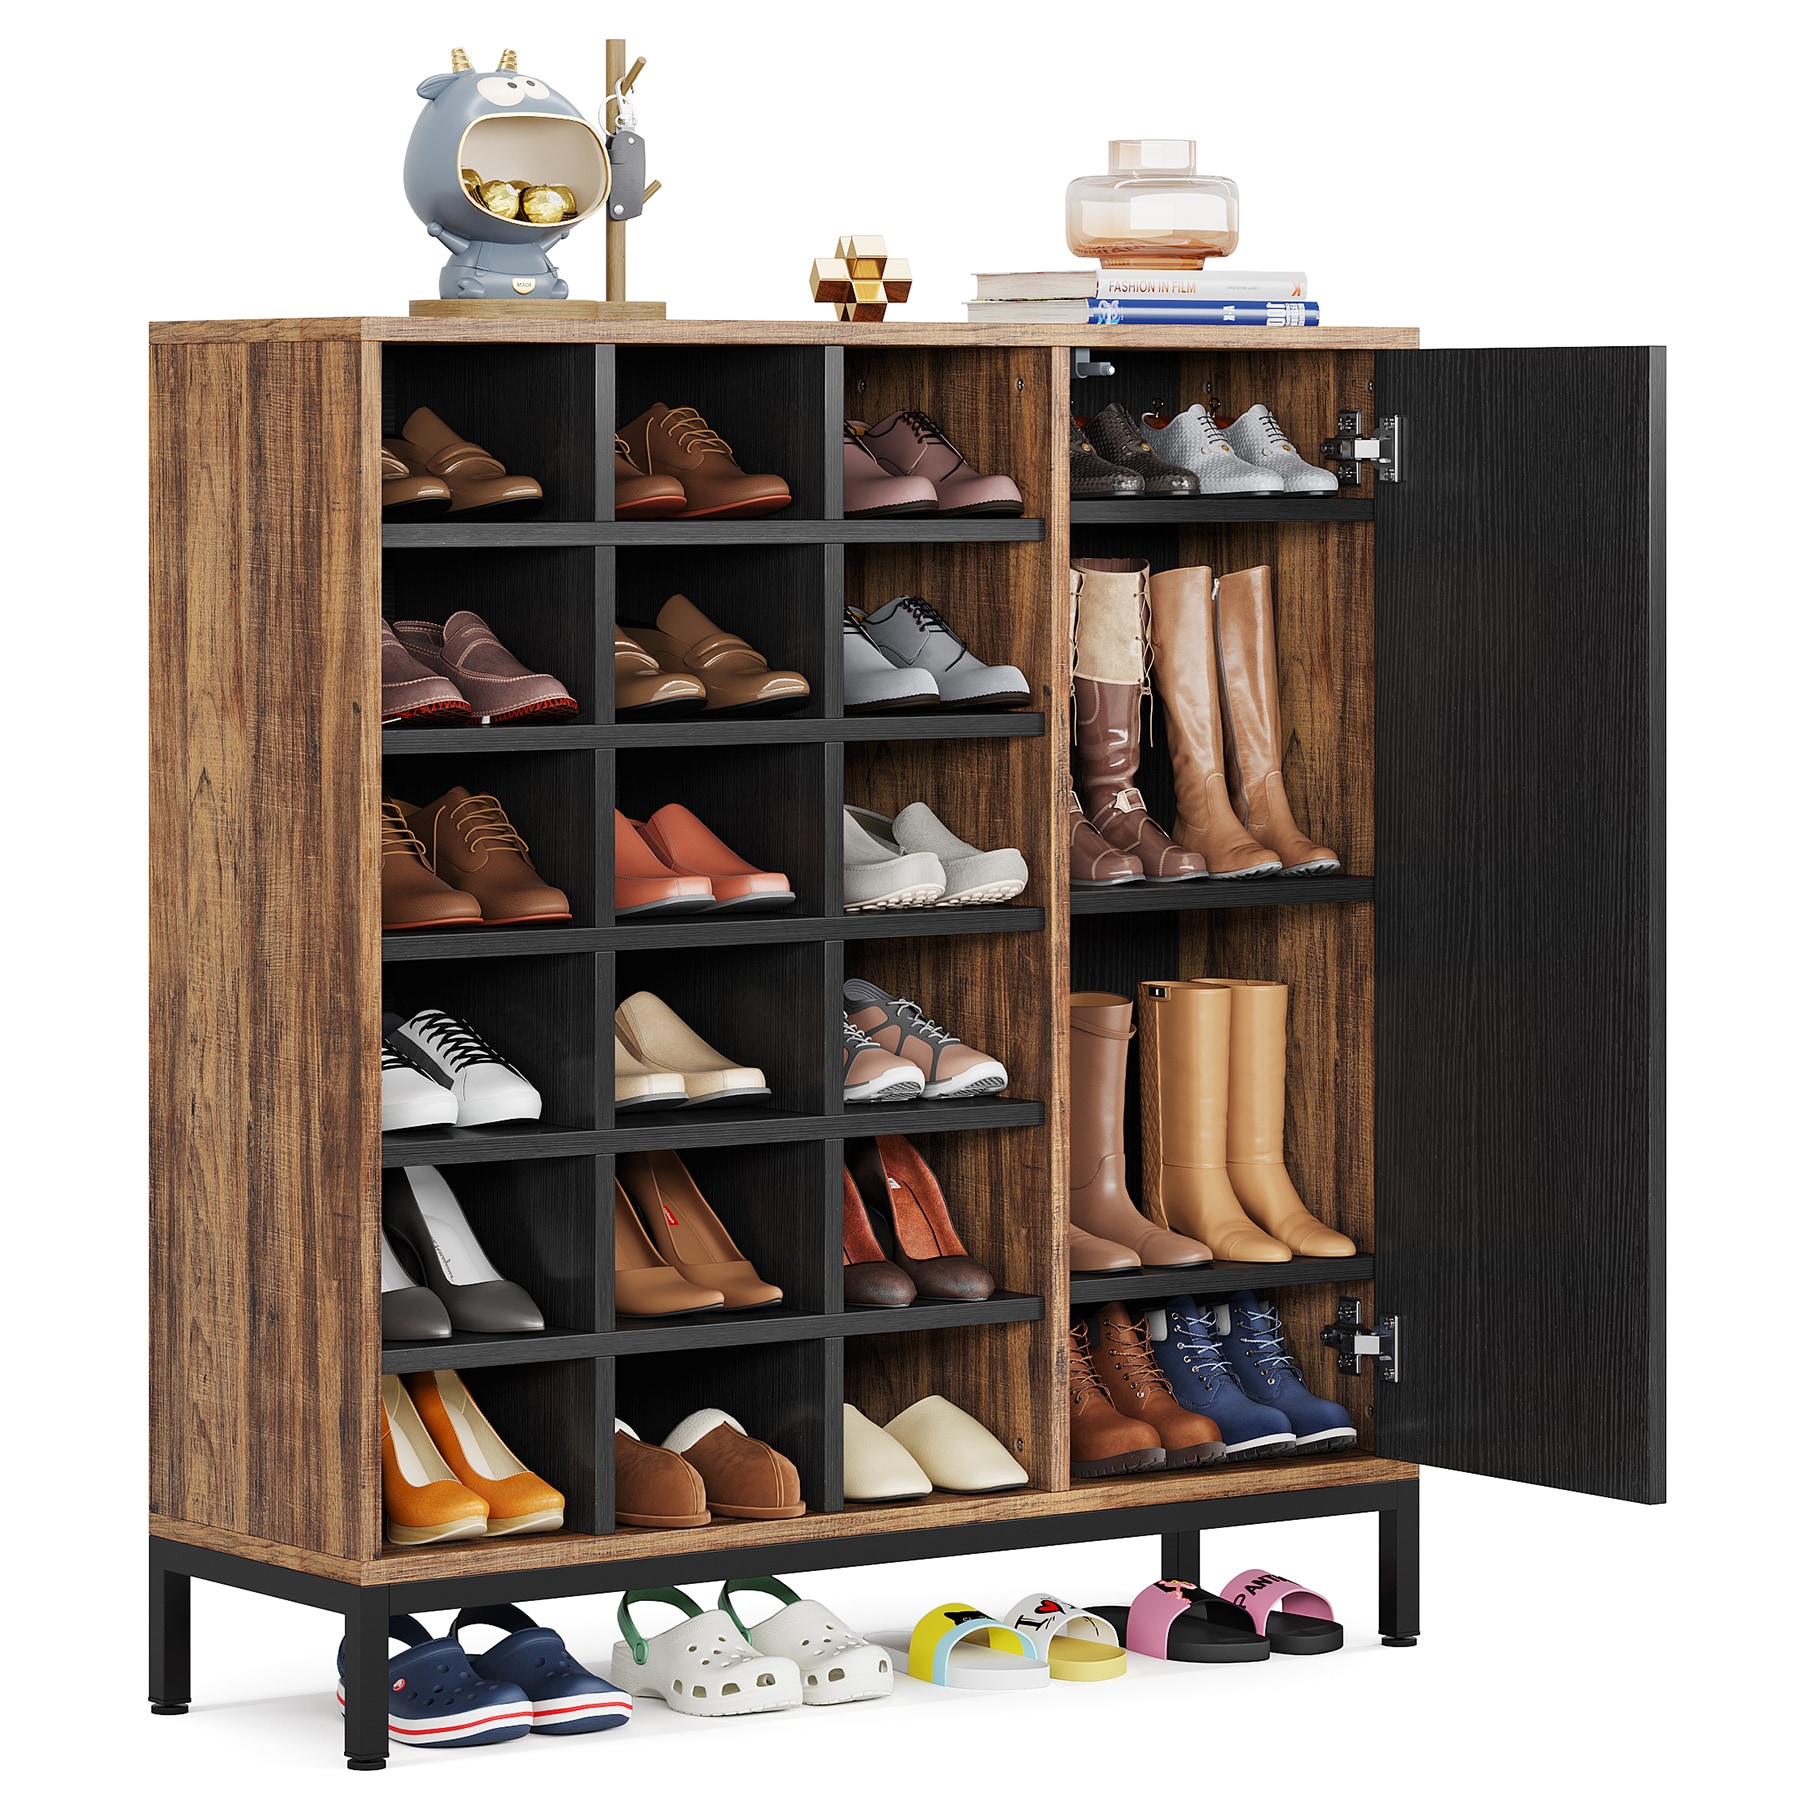 36 Inches Rustic Shoe Rack 3 Levels, Shoe Storage, Shoe Organizer